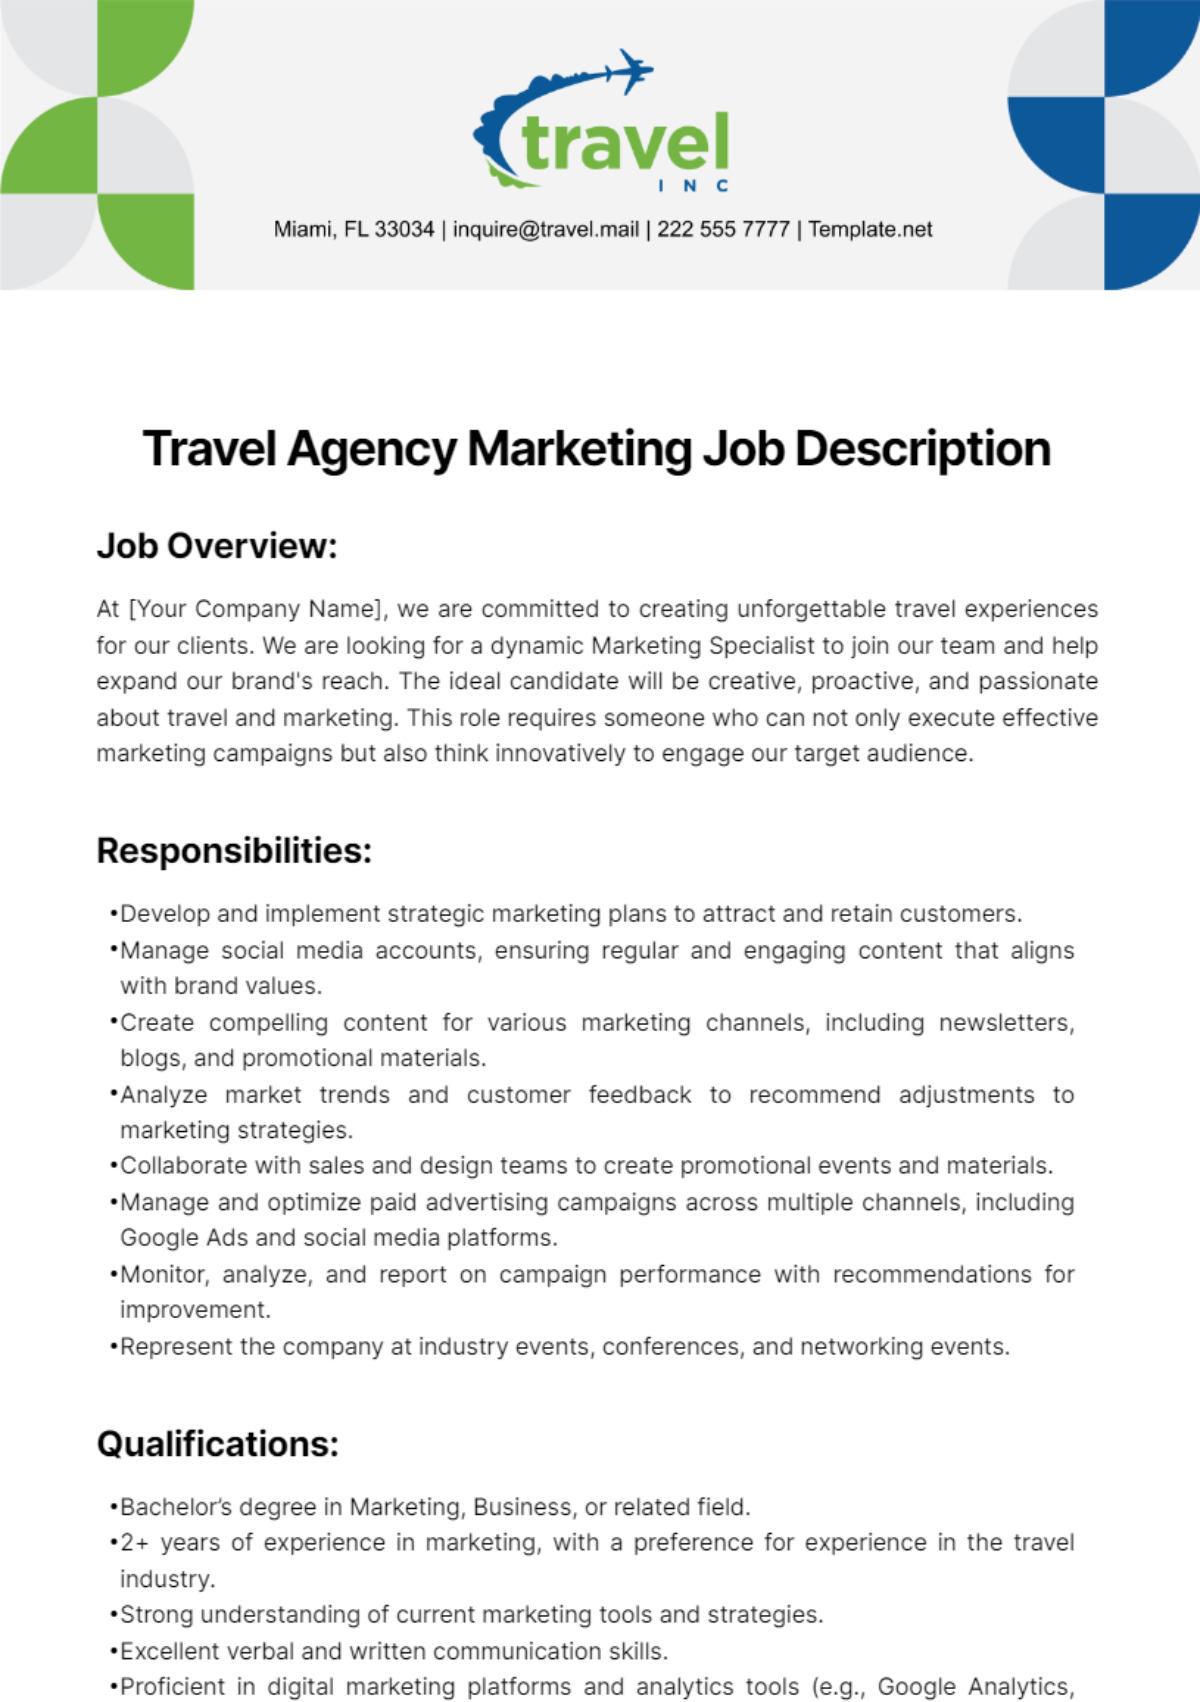 Free Travel Agency Marketing Job Description Template